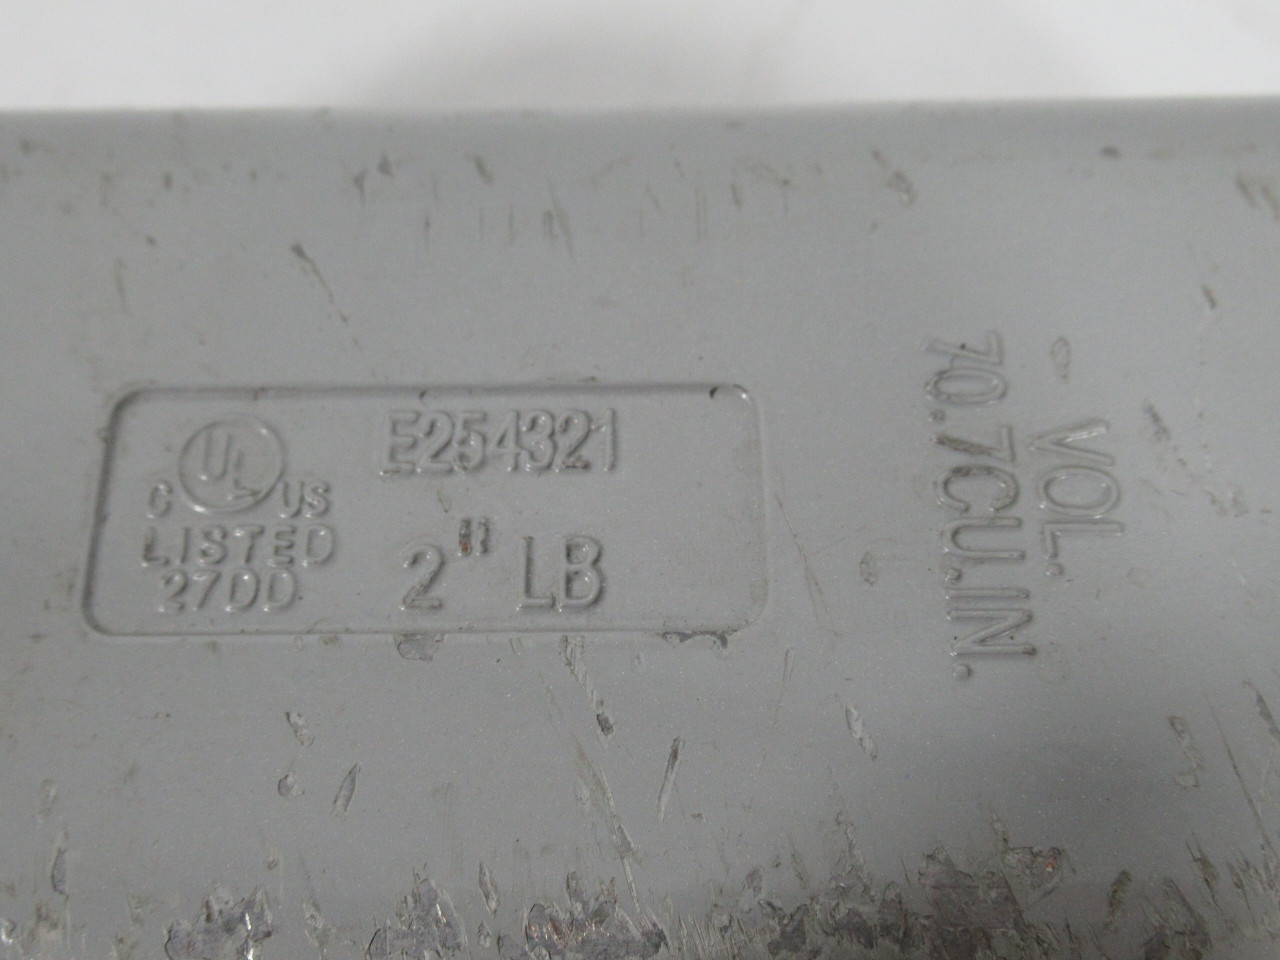 Generic 2-LB 27DD 2" Aluminum 70.7CU-IN Hub Conduit w/o Cover USED